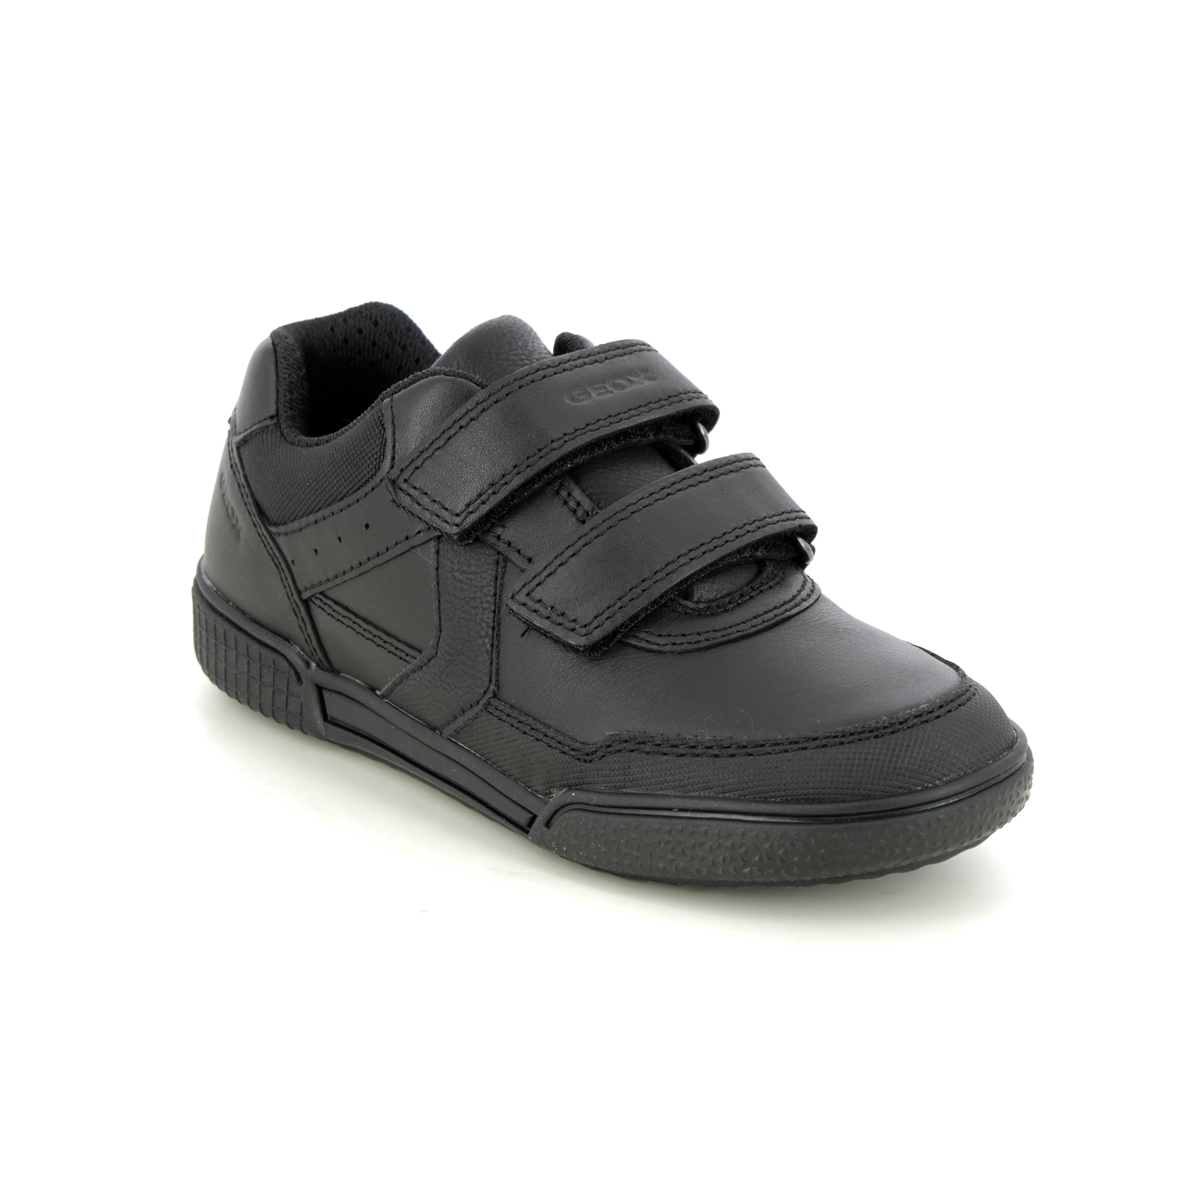 Geox - Poseido Boy 2V (Black Leather) J02Bca-C9999 In Size 31 In Plain Black Leather For School For kids